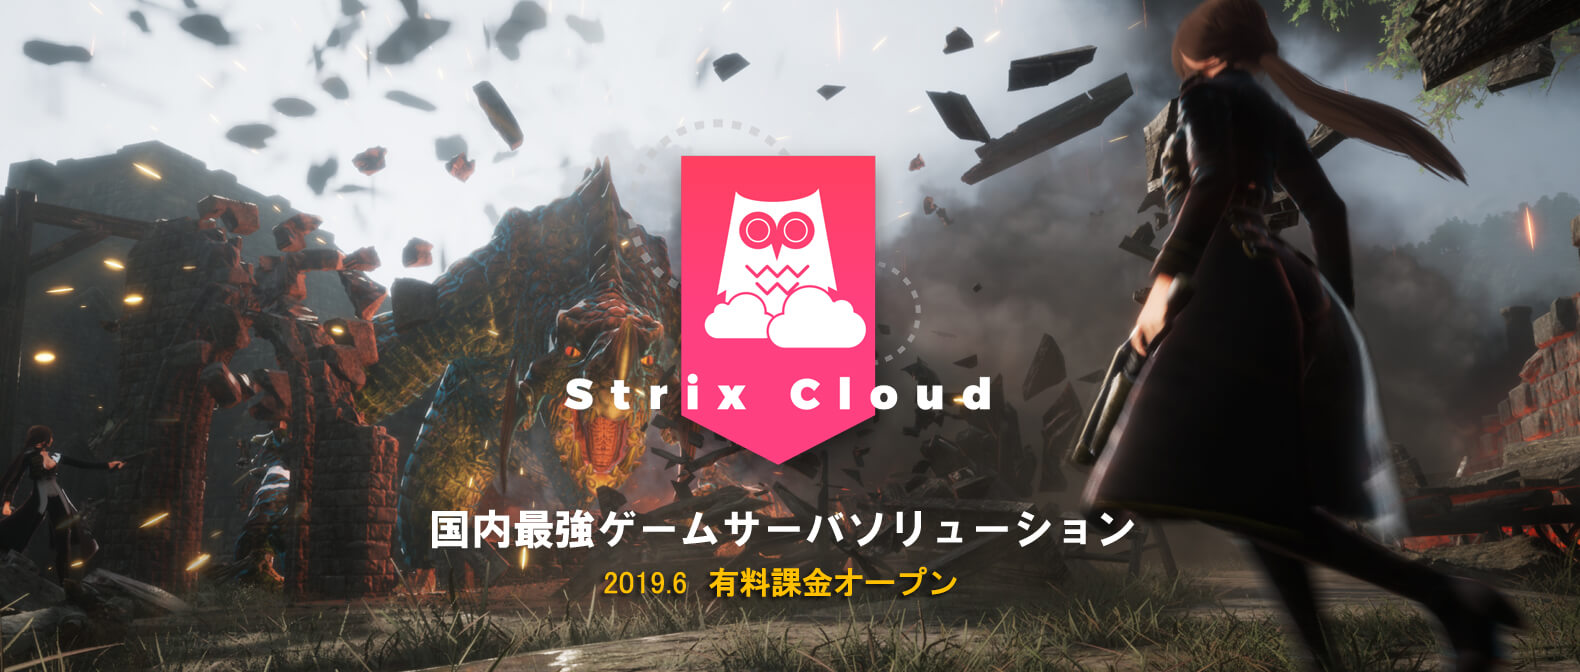 Strix Cloud 国内最強ゲームサーバーソリューション 2019.06有料課金オープン